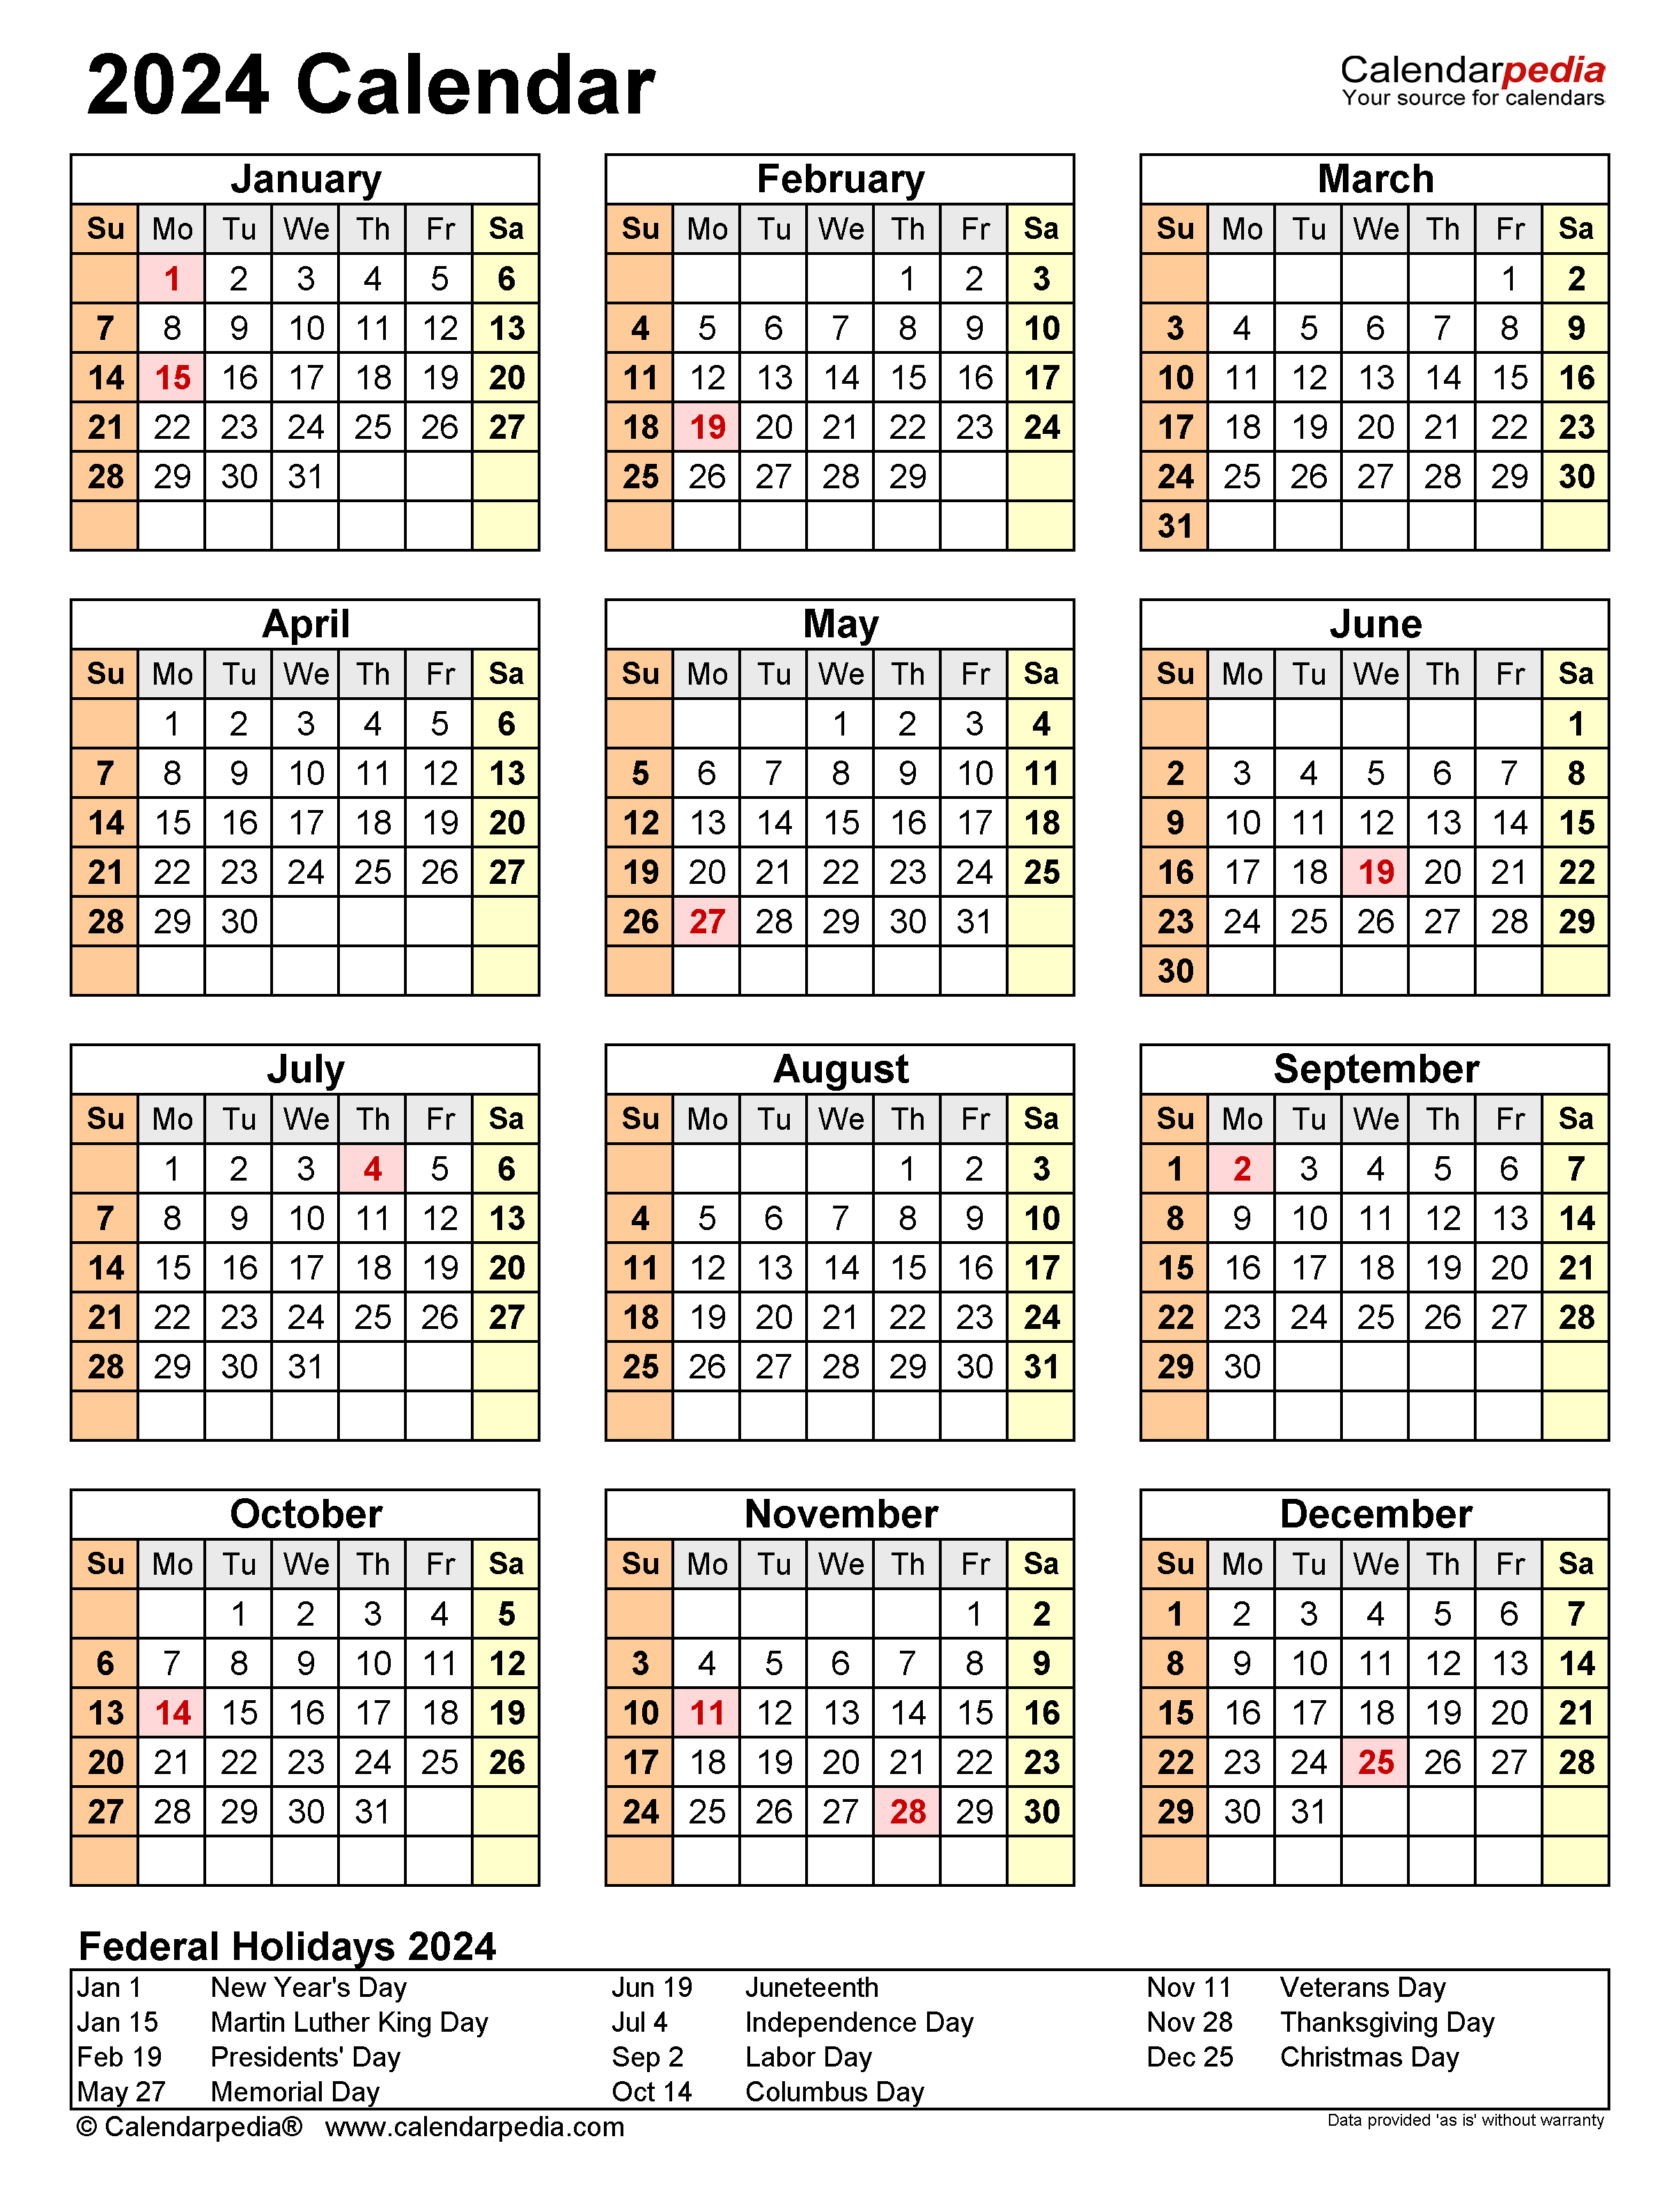 Free Printable 2024 Calendar With Holidays Crownflourmills - Free Printable 2024 Calendar With Holidays March